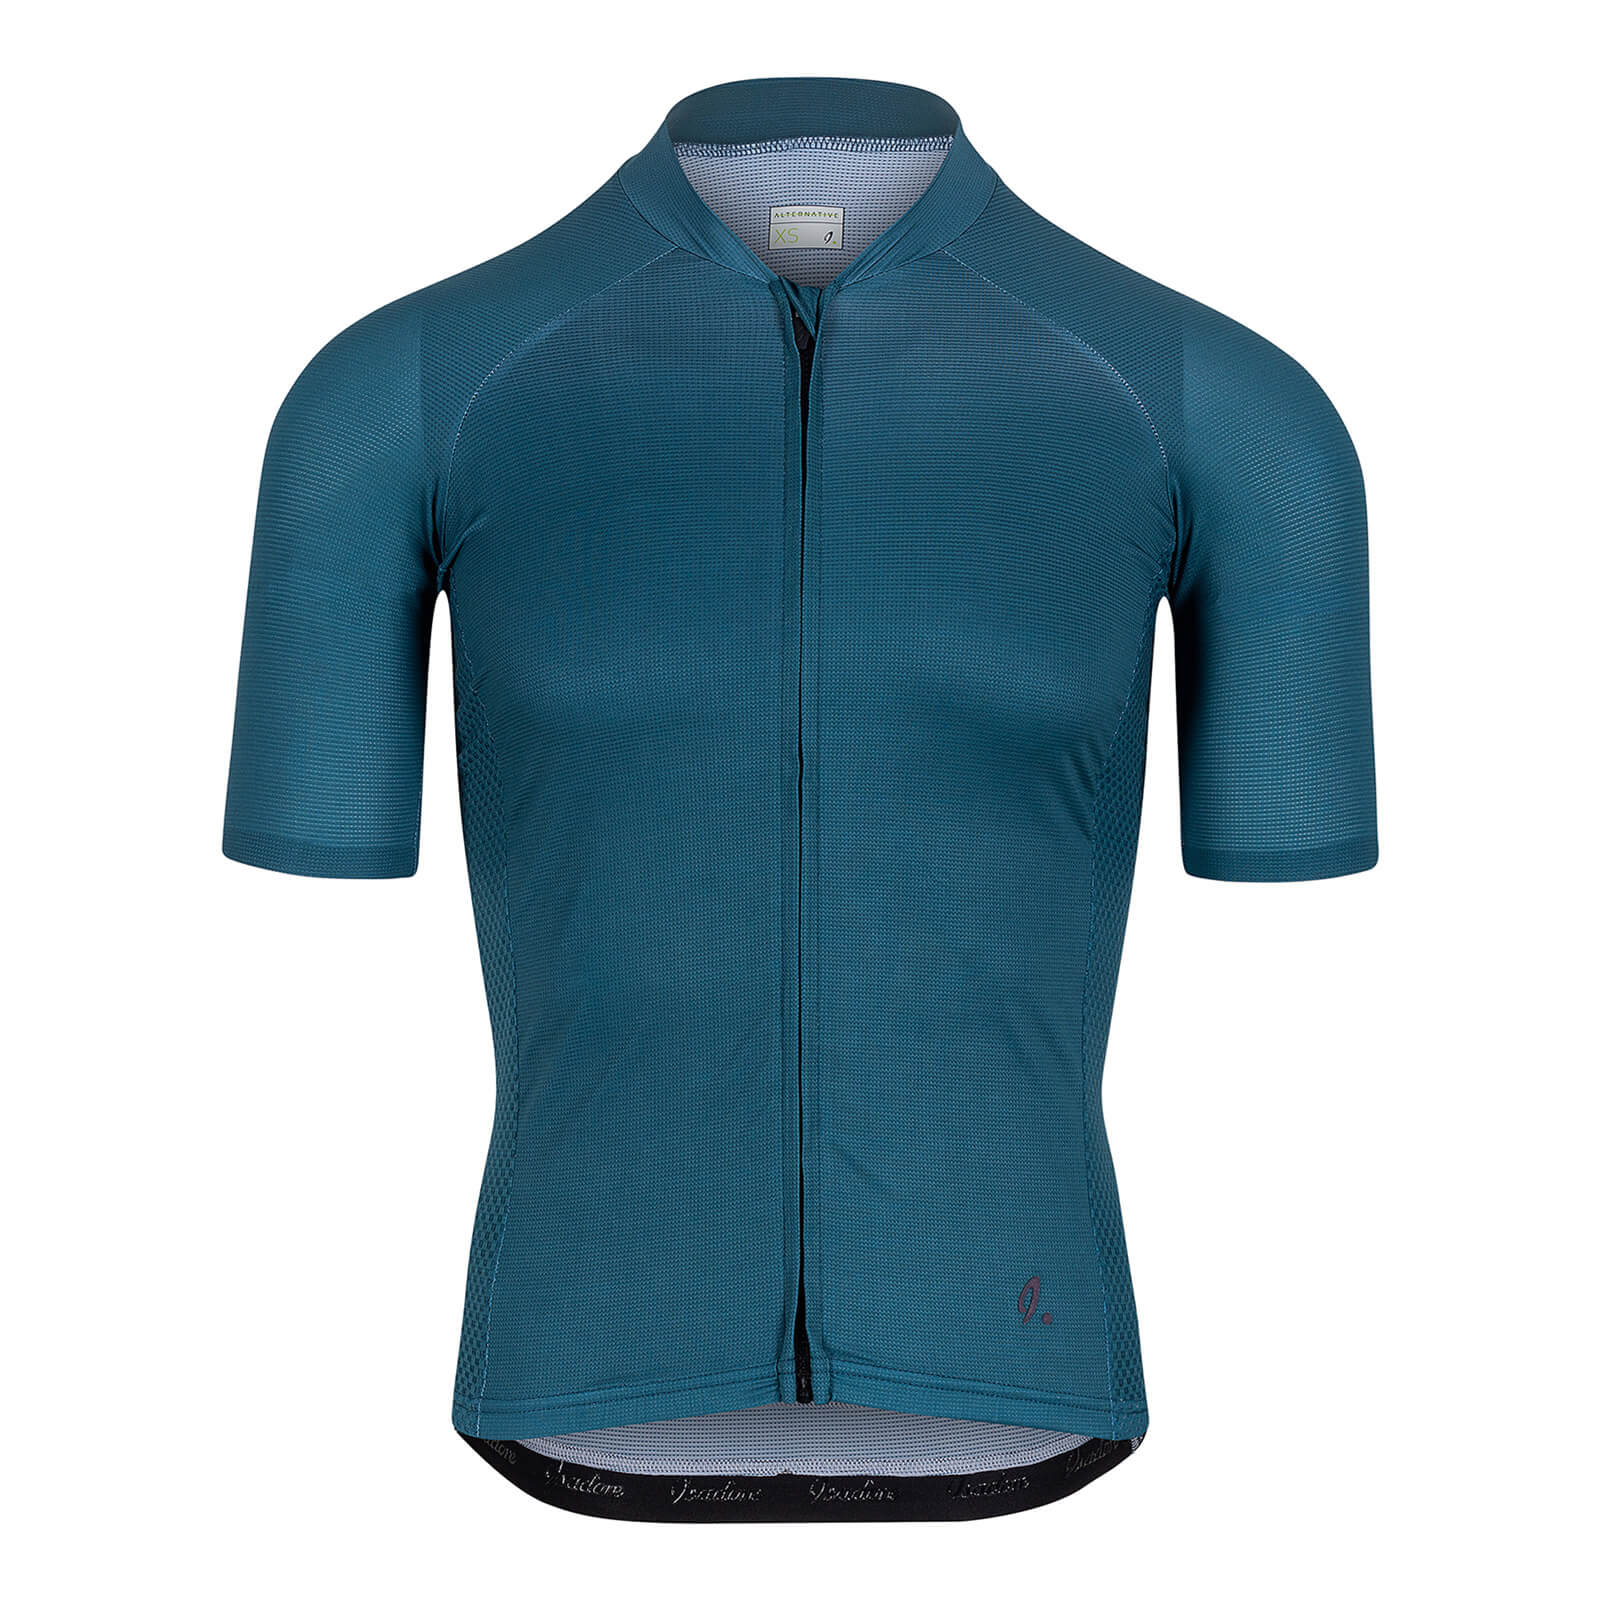 Isadore Alternative Short Sleeve Jersey - XL - Atlantic Blue